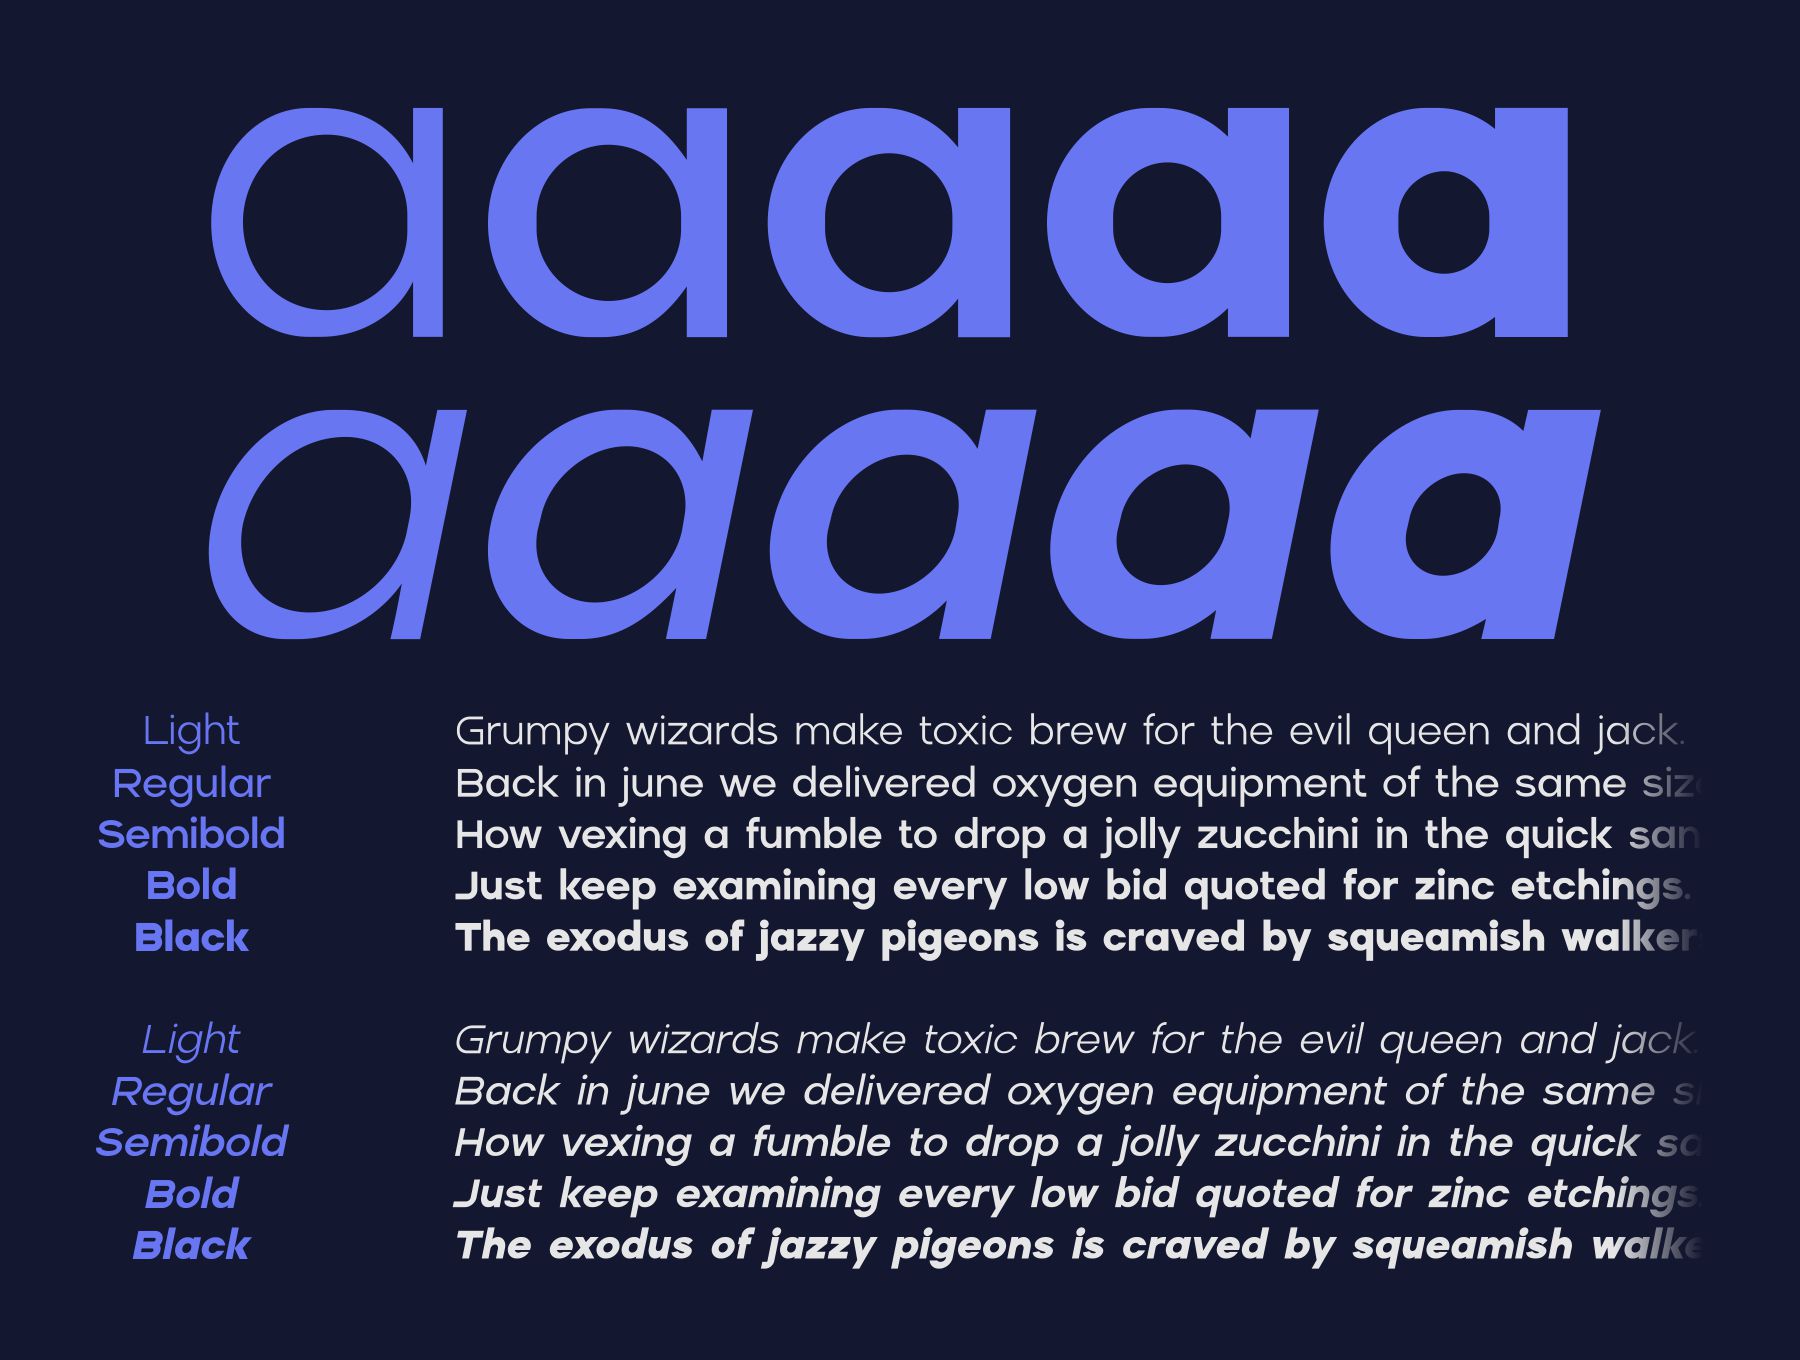 Alacrity Sans字体系列 Alacrity Sans Fonts Family otf格式-字体-到位啦UI